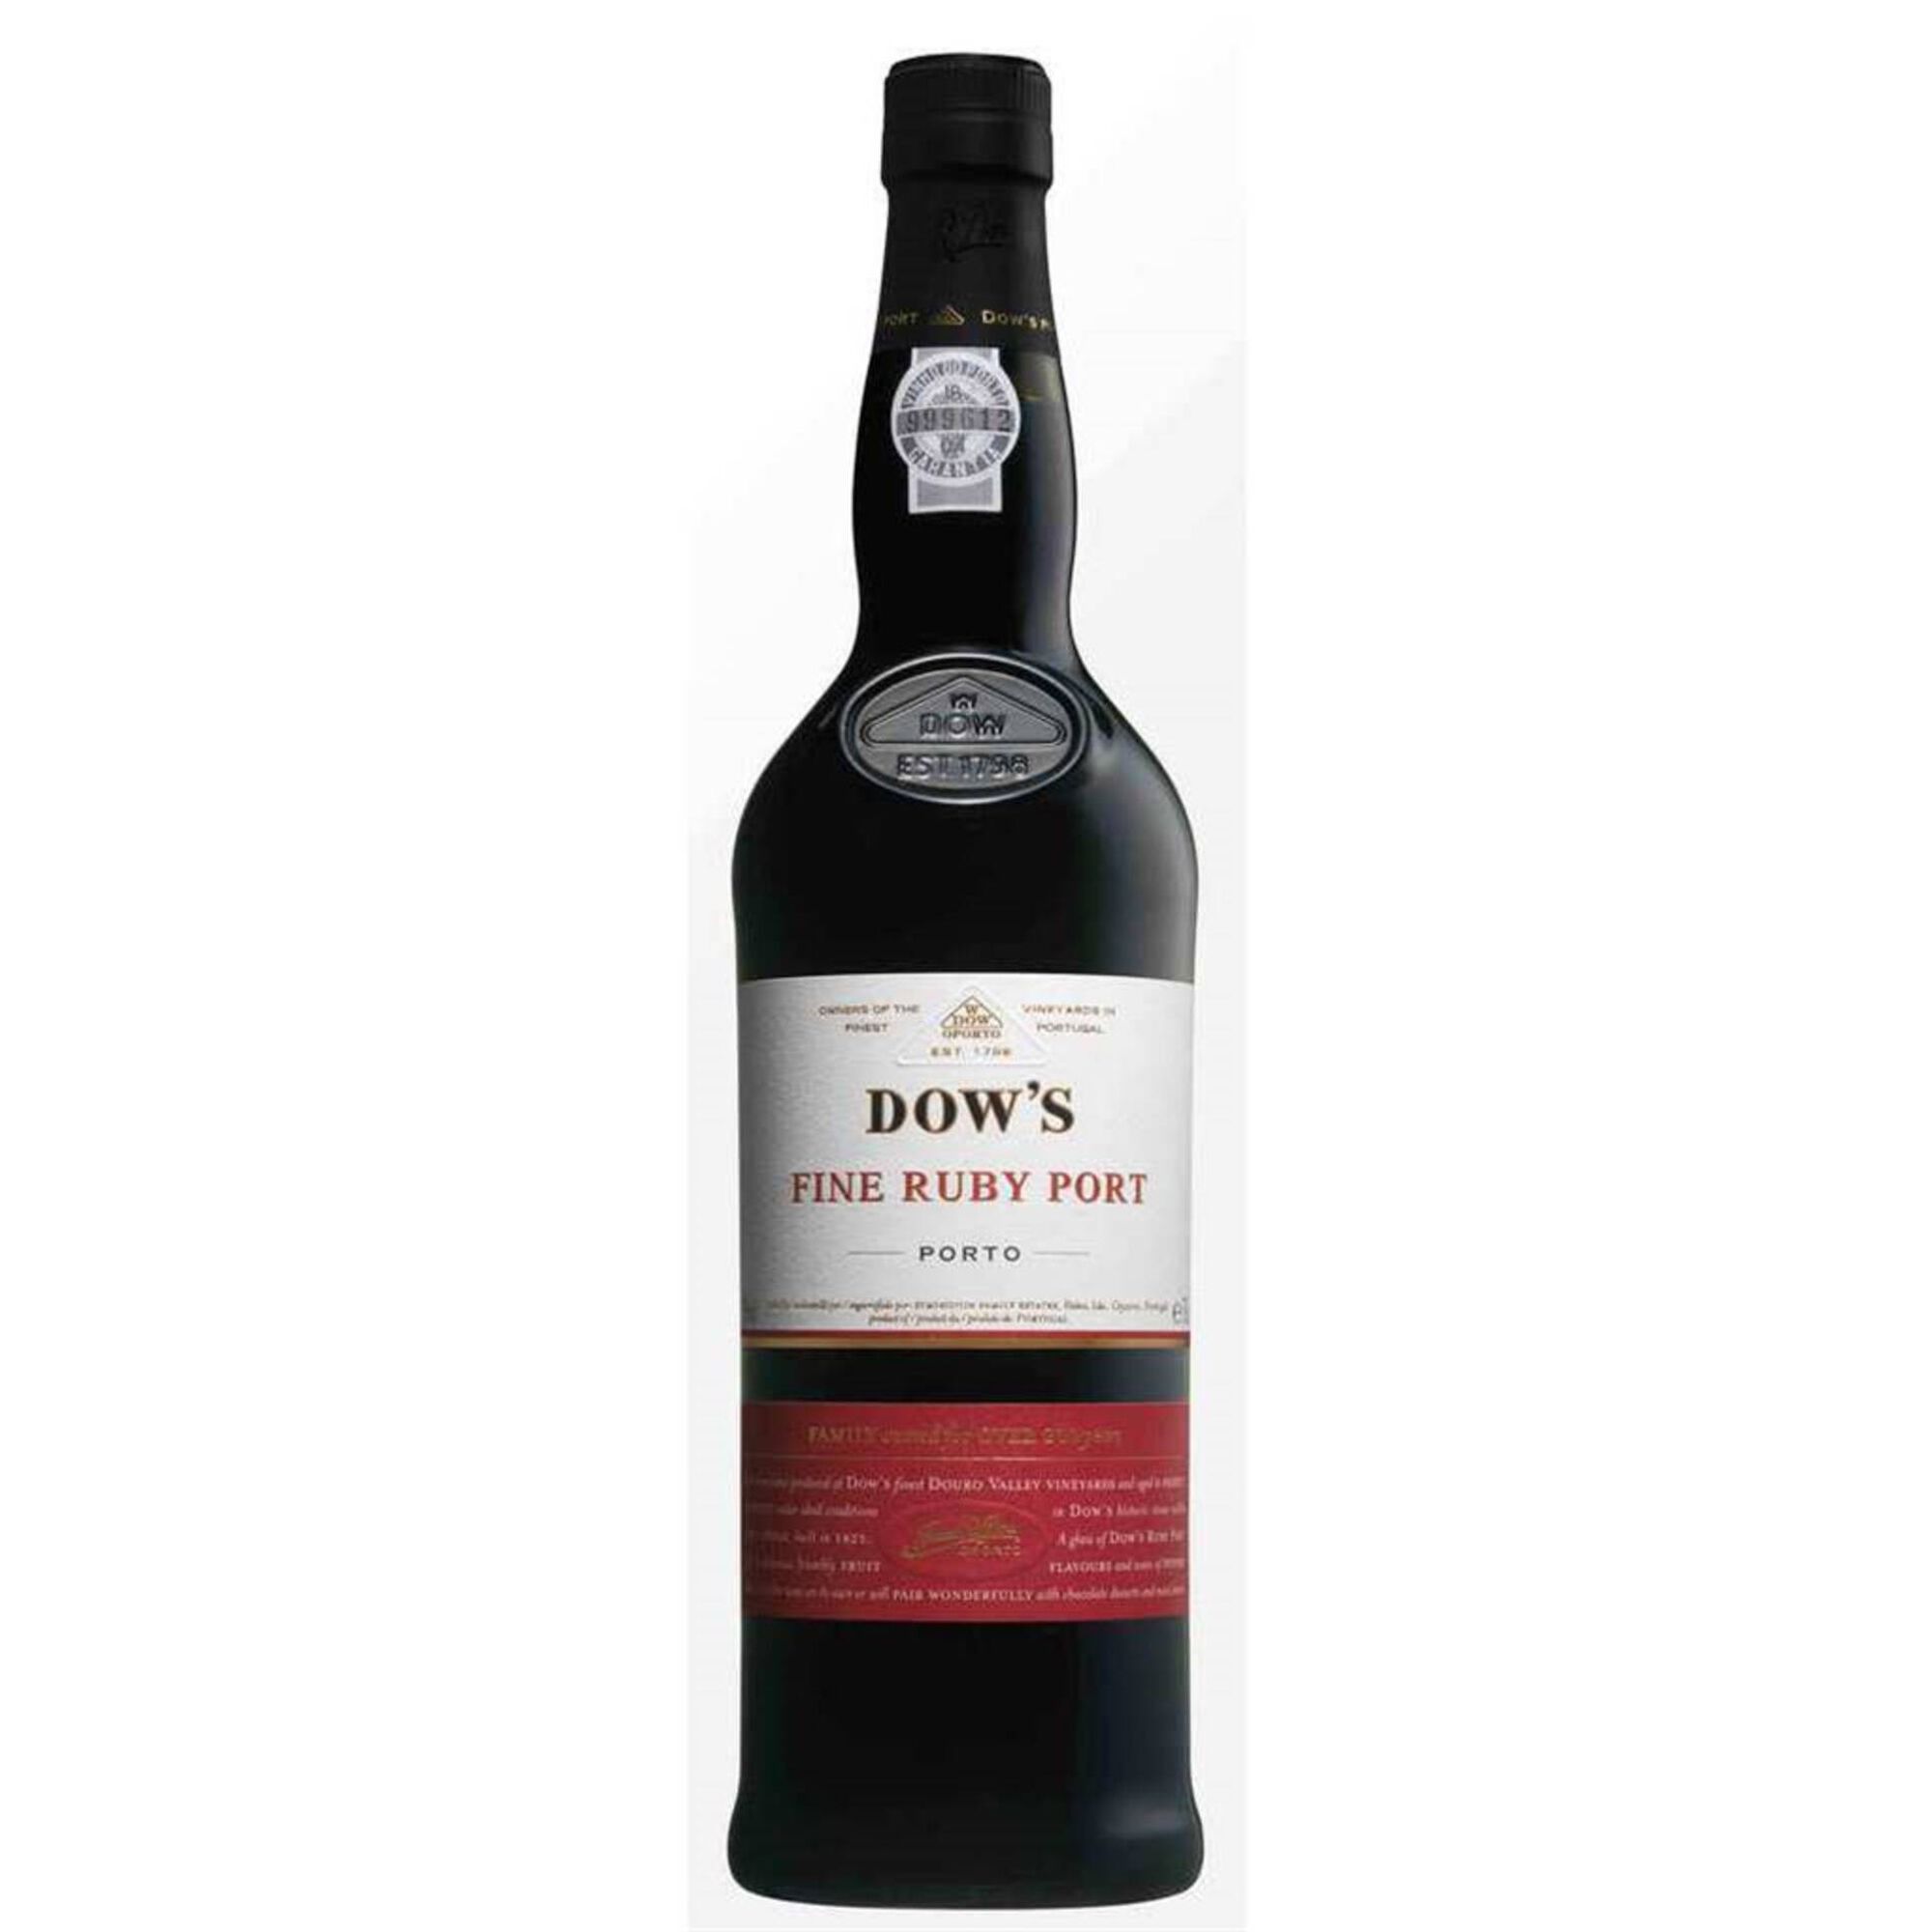 Dow's Vinho do Porto Fine Ruby